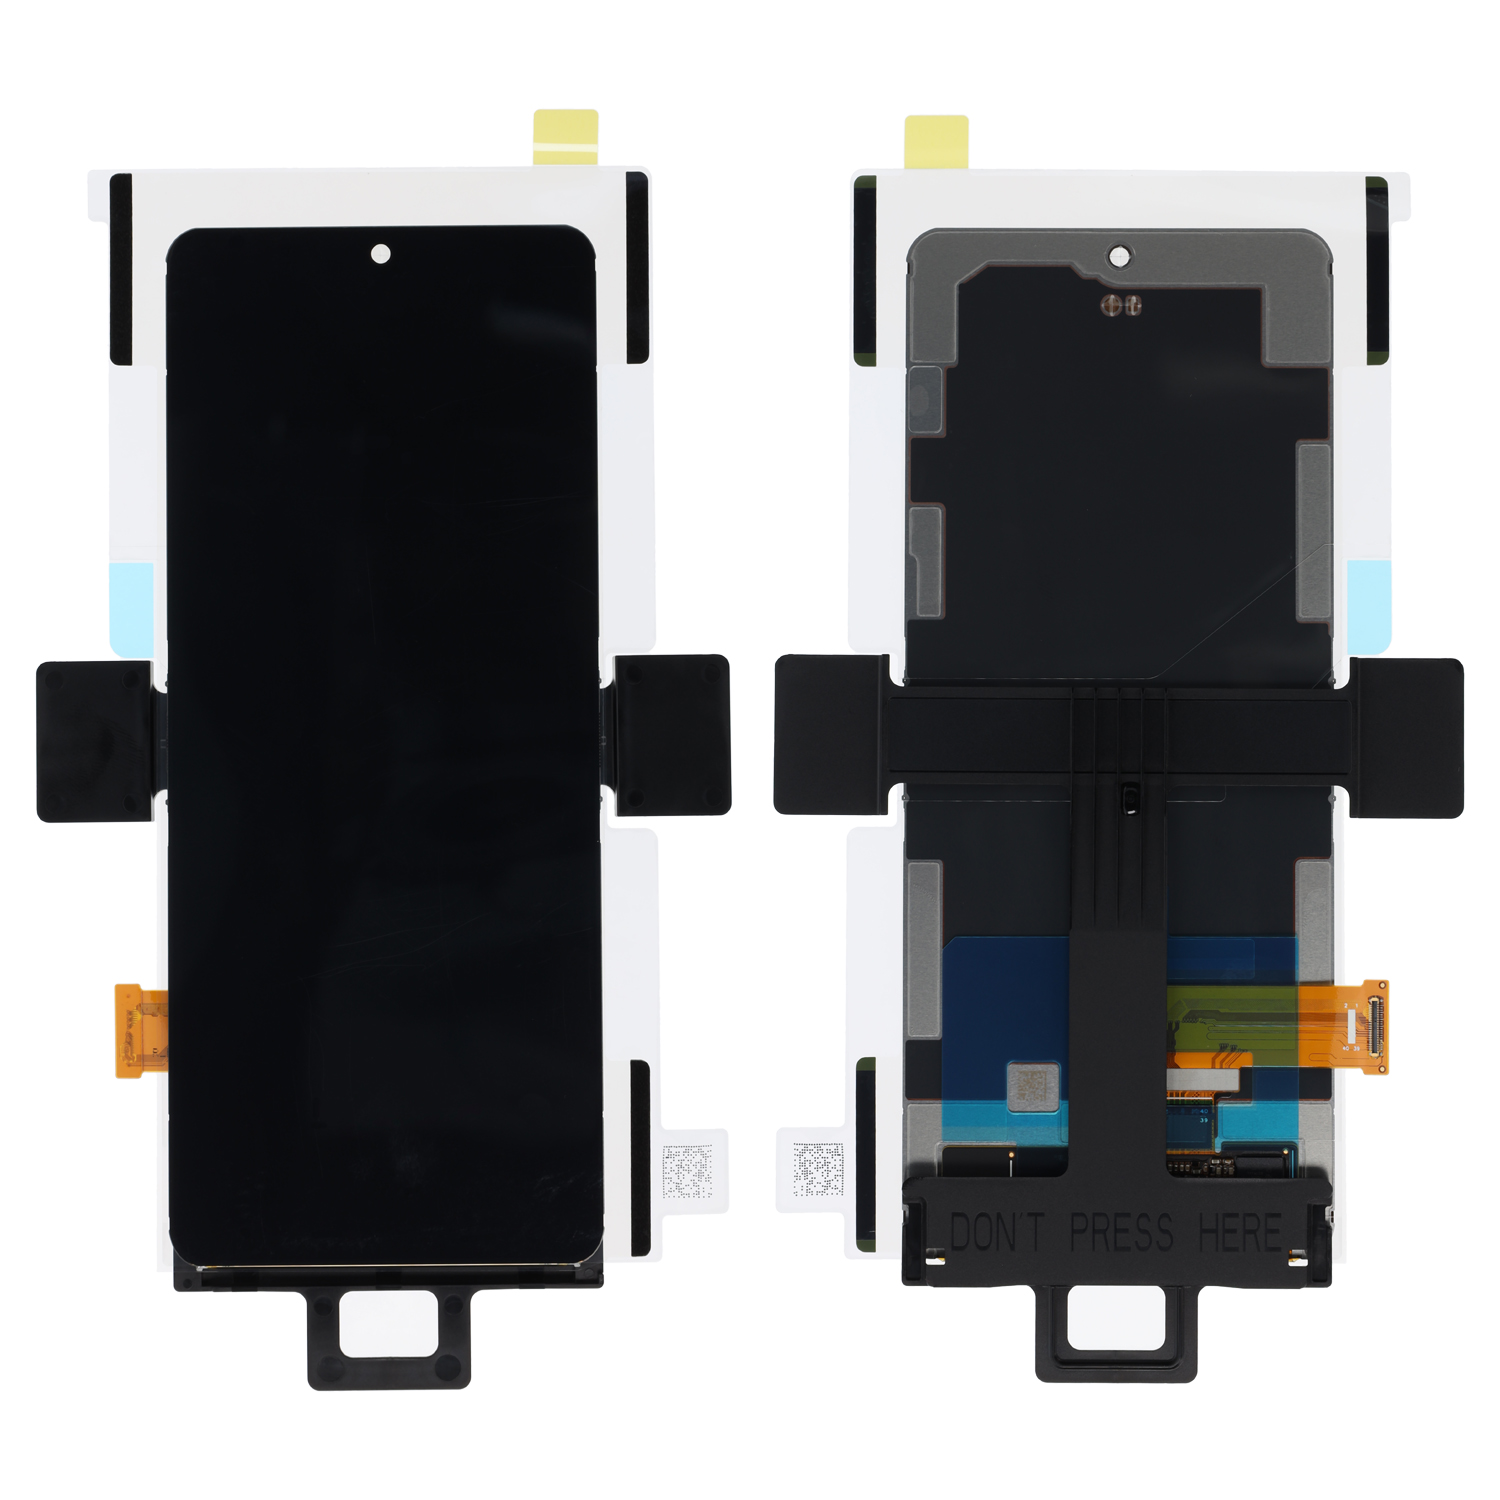 Samsung Galaxy Z Flip 5G (707B) LCD Display (without frame)